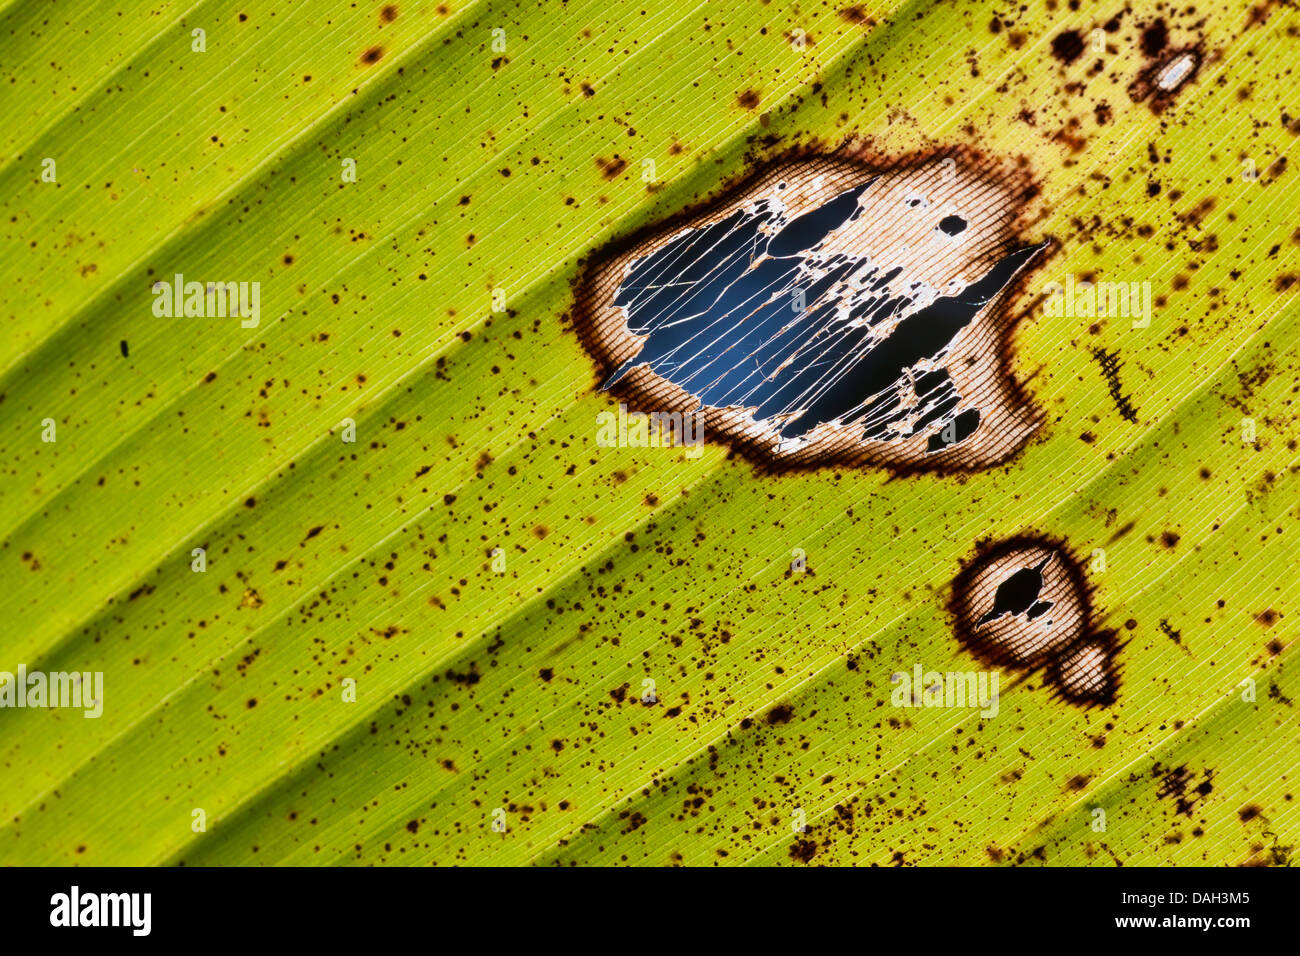 common banana (Musa paradisiaca var. sapientum), banana leaf with spots Stock Photo